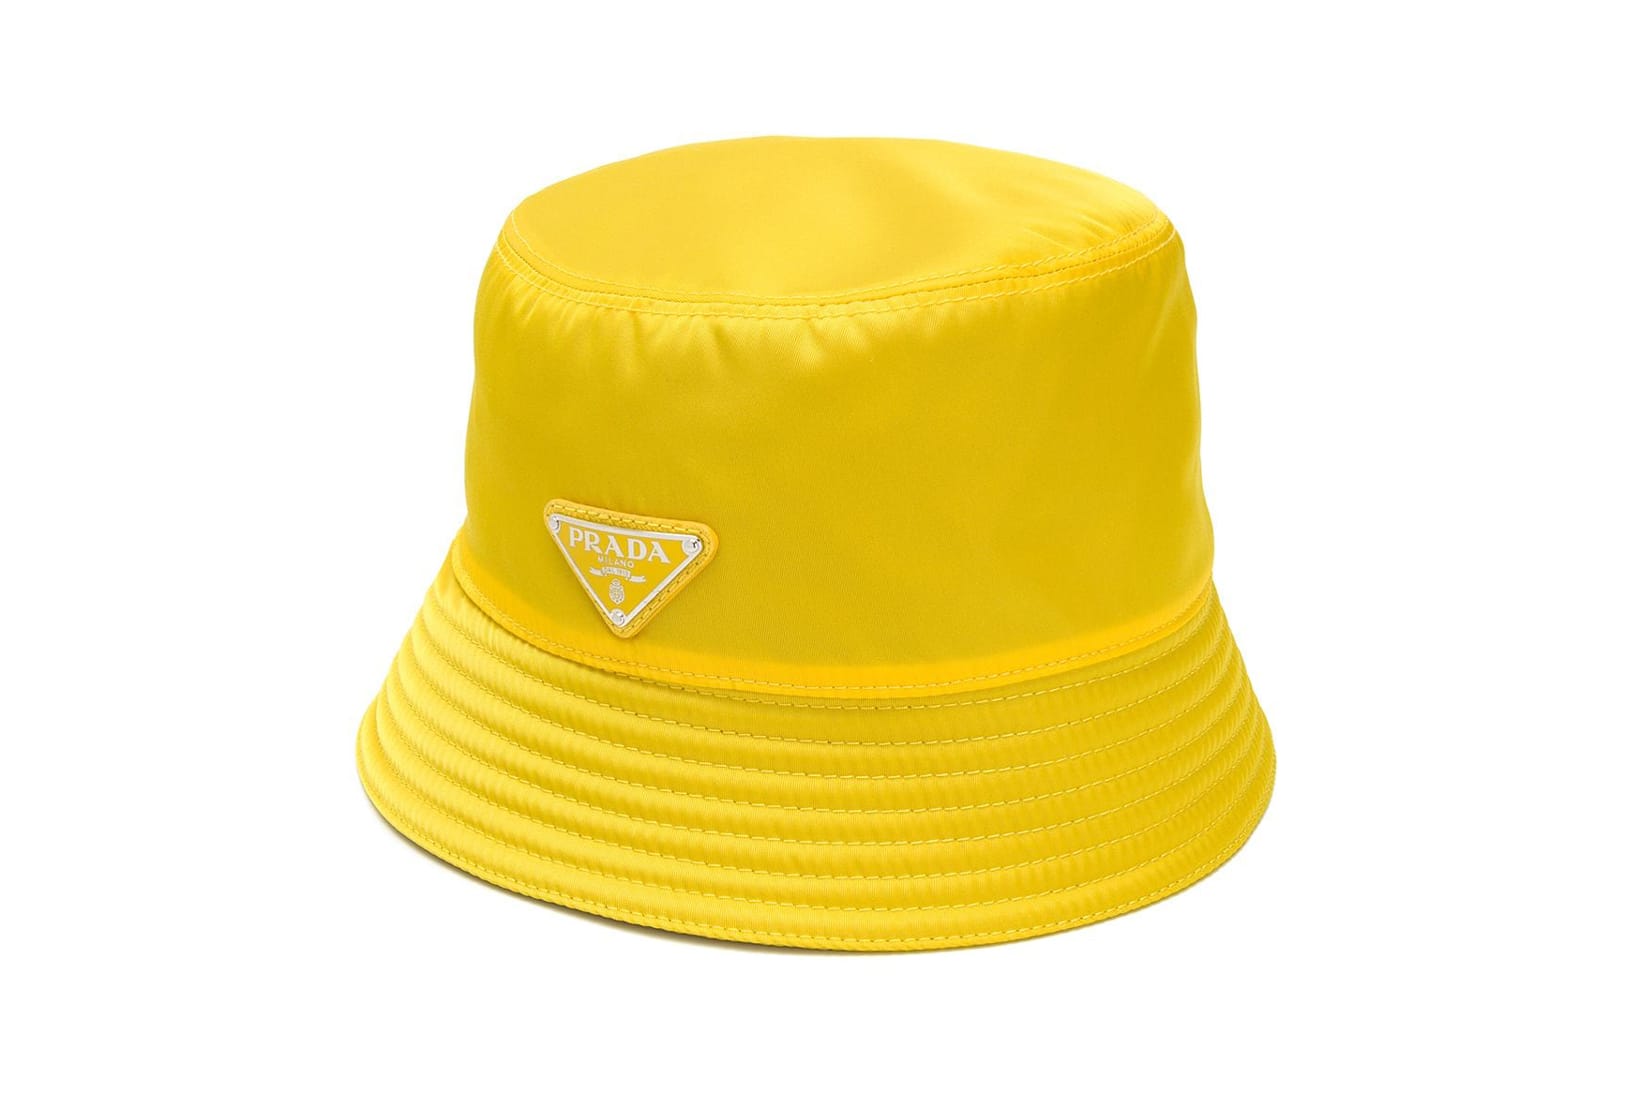 Prada Releases Sunny Yellow Bucket Hat 